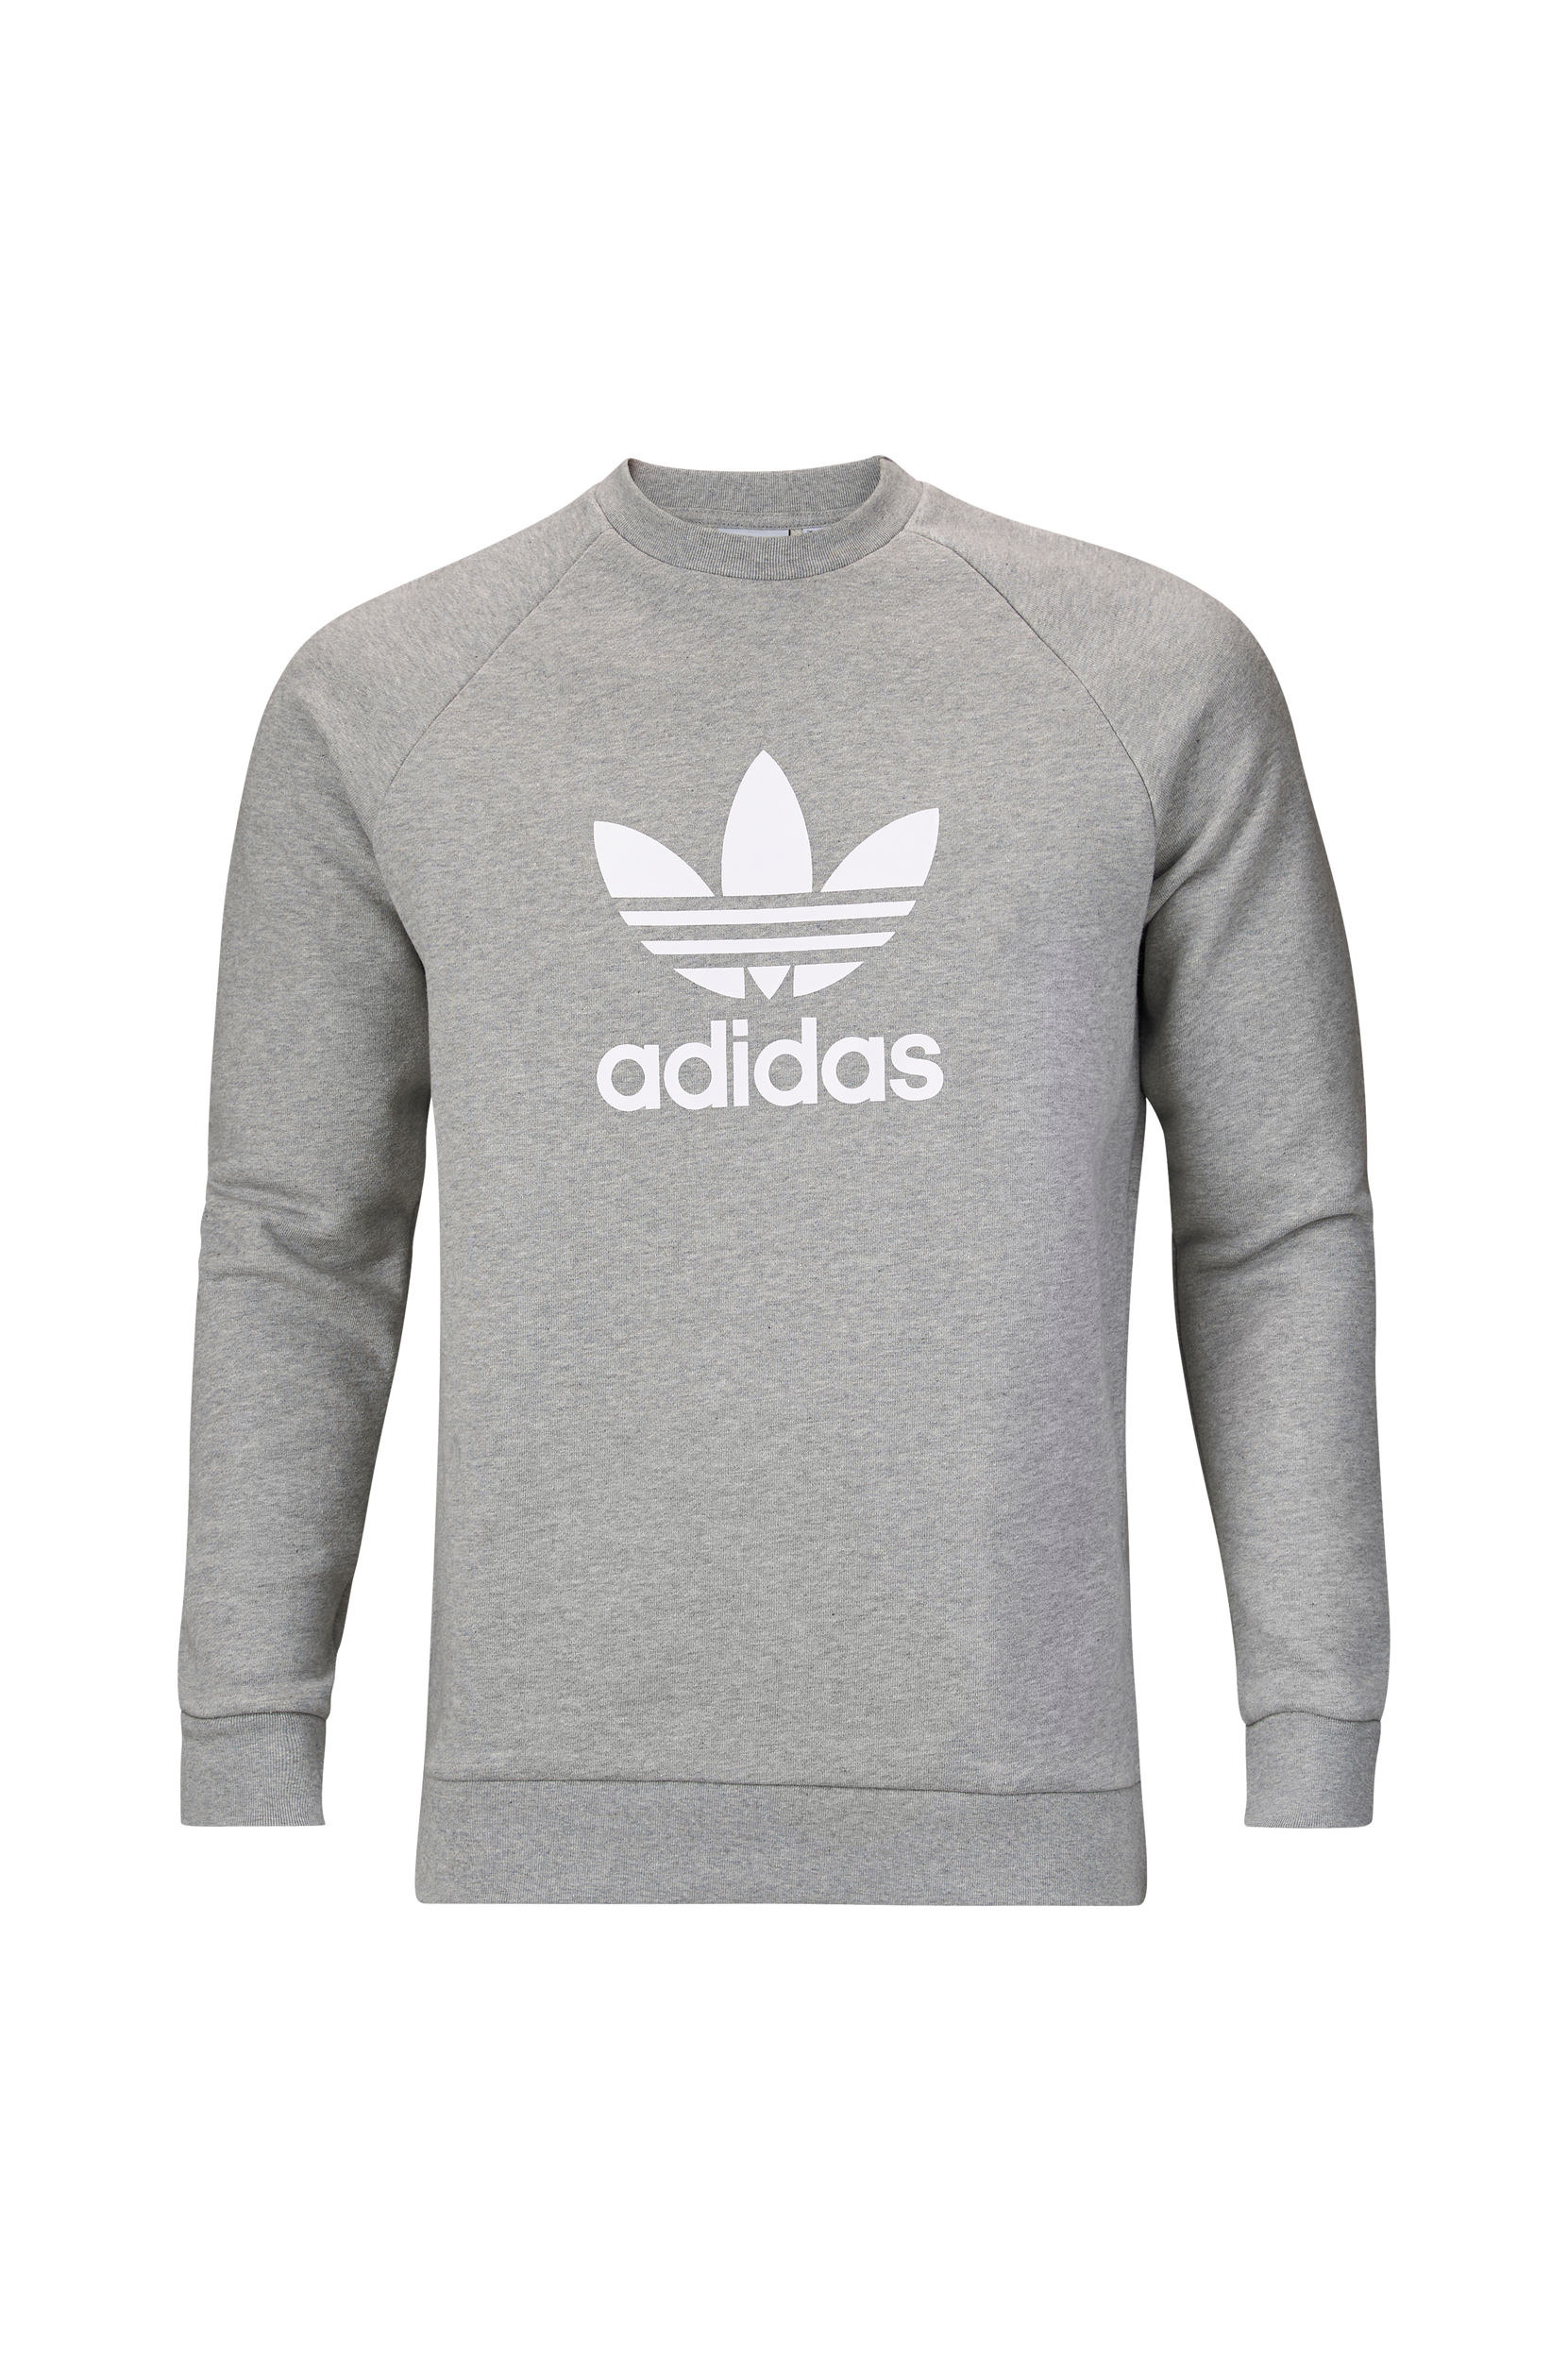 adidas Originals - Sweatshirt Trefoil Warm-up Crew - Grå - XS